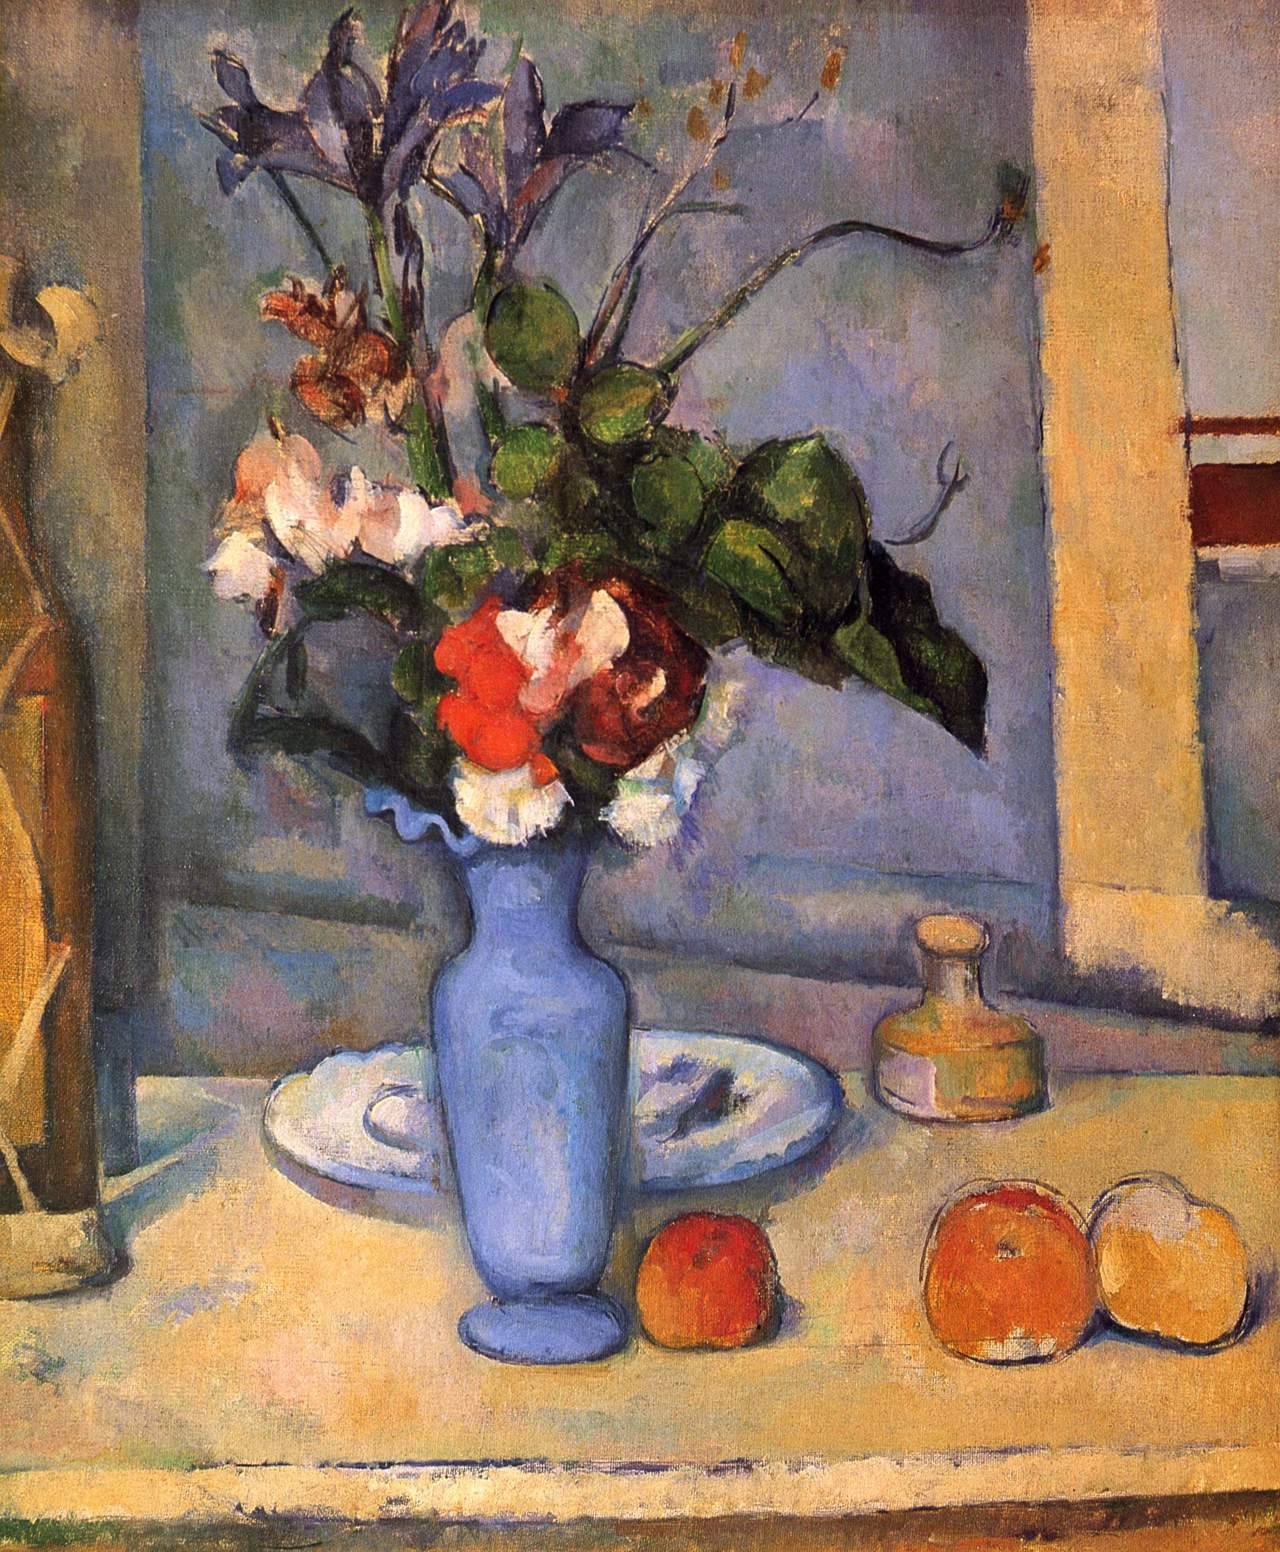 artist-cezanne:
â€œ The Blue Vase, 1887, Paul Cezanne
Size: 62x51 cm
Medium: oil on canvasâ€